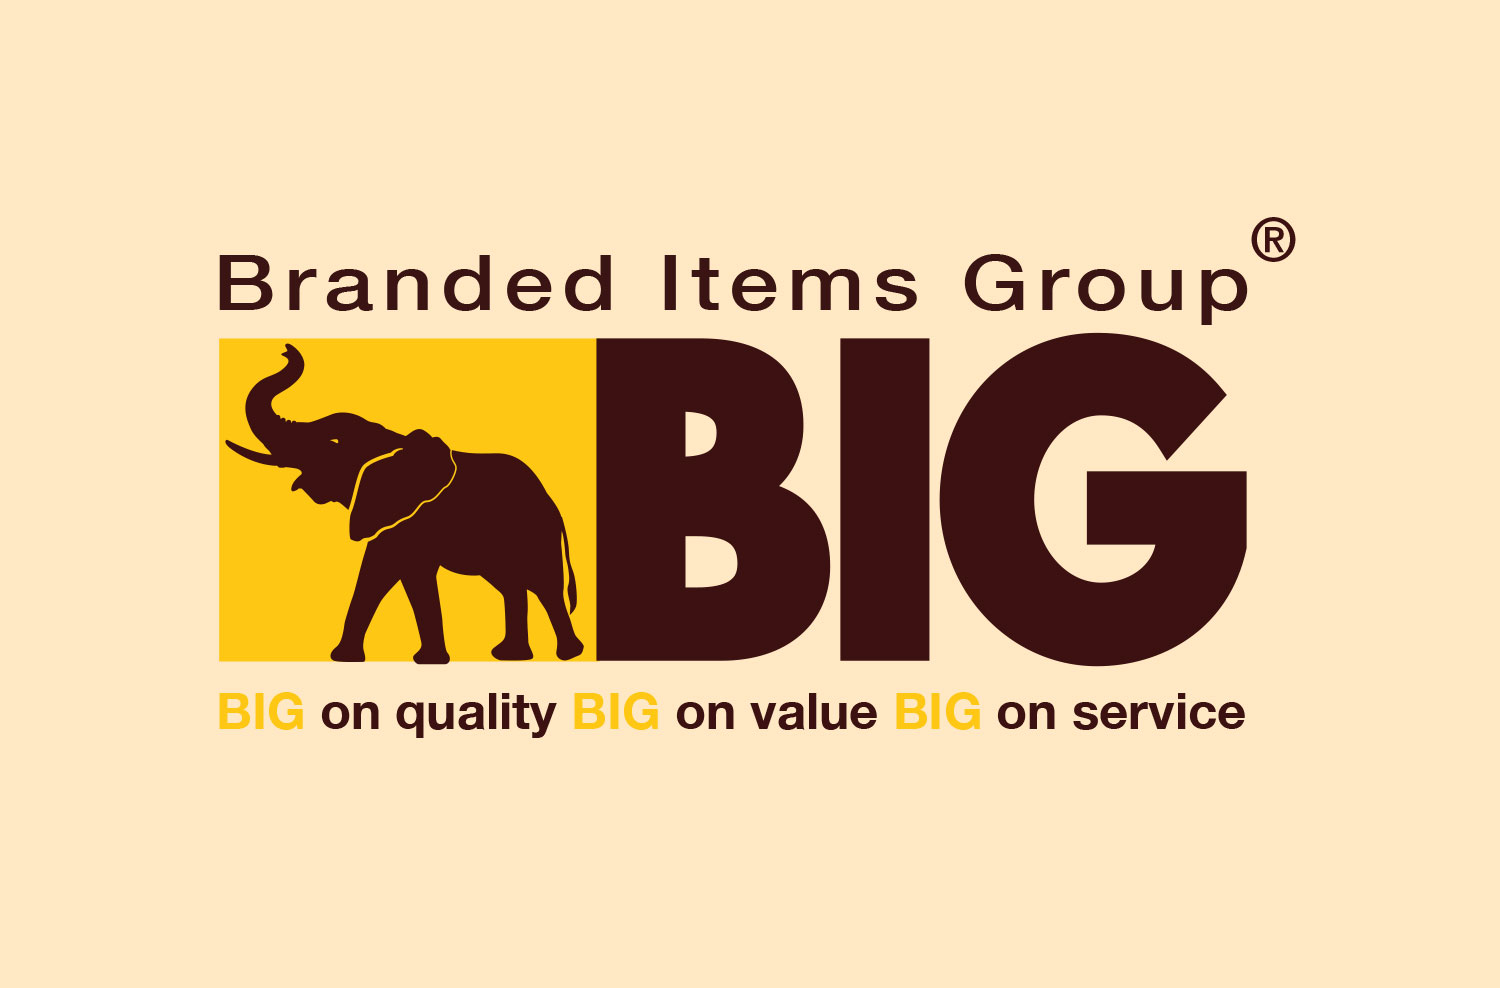 BIG Branded Items Group company news testimonial